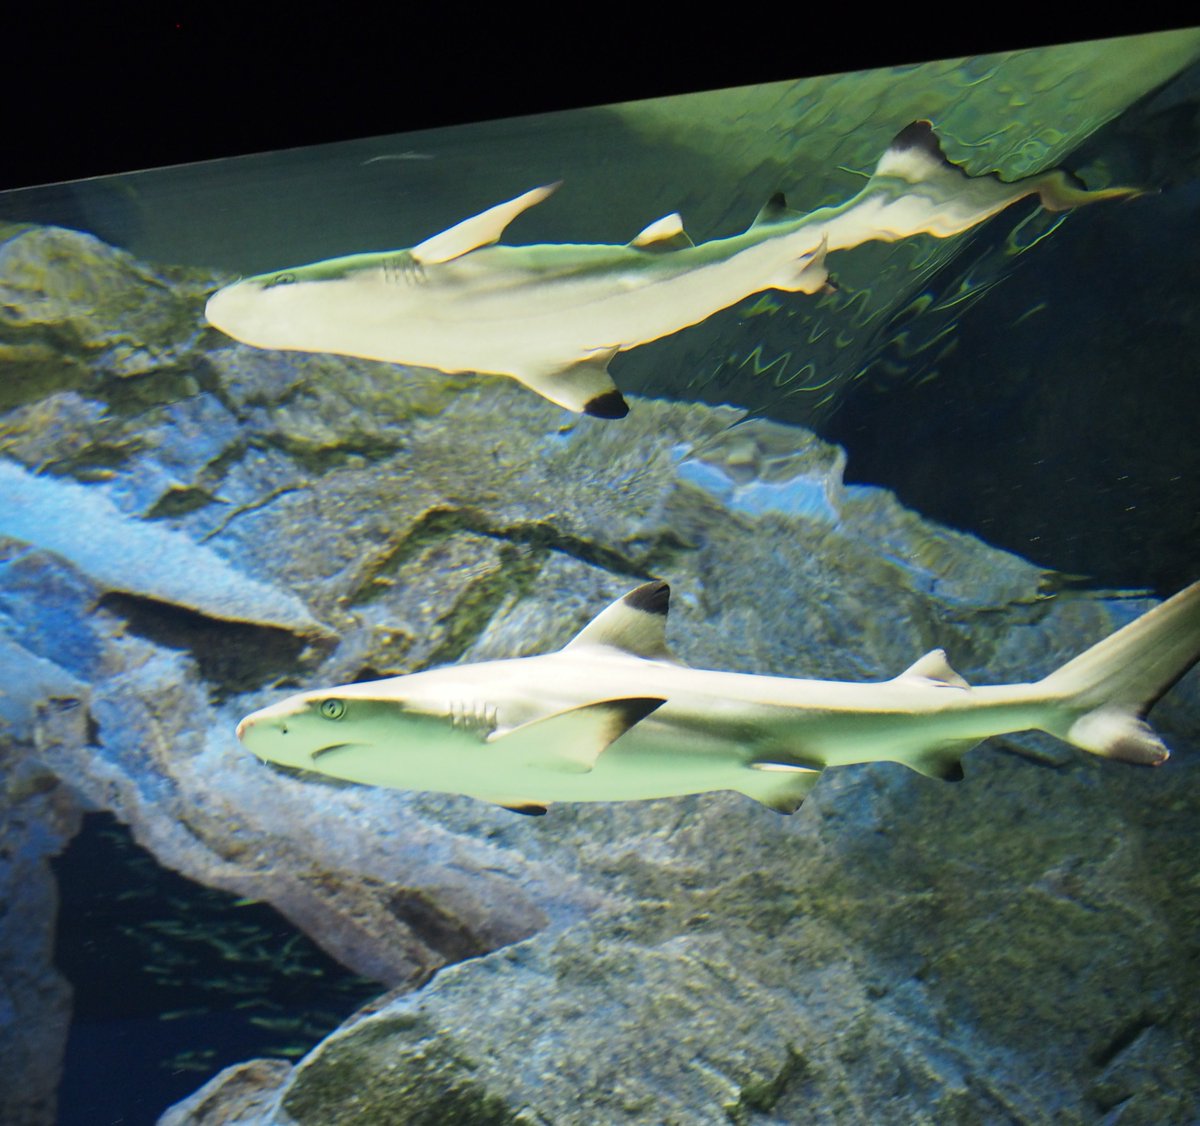 O Xrhsths サンシャイン水族館 Sto Twitter 環境と生命の水槽 ツマグロというサメを展示中です 下の方から仰ぎ見ると 水面に鏡のようににサメが映って面白いです キビナゴも慣れてきて水槽全体を悠々と群れて泳いでいます サンシャイン水族館 サメ